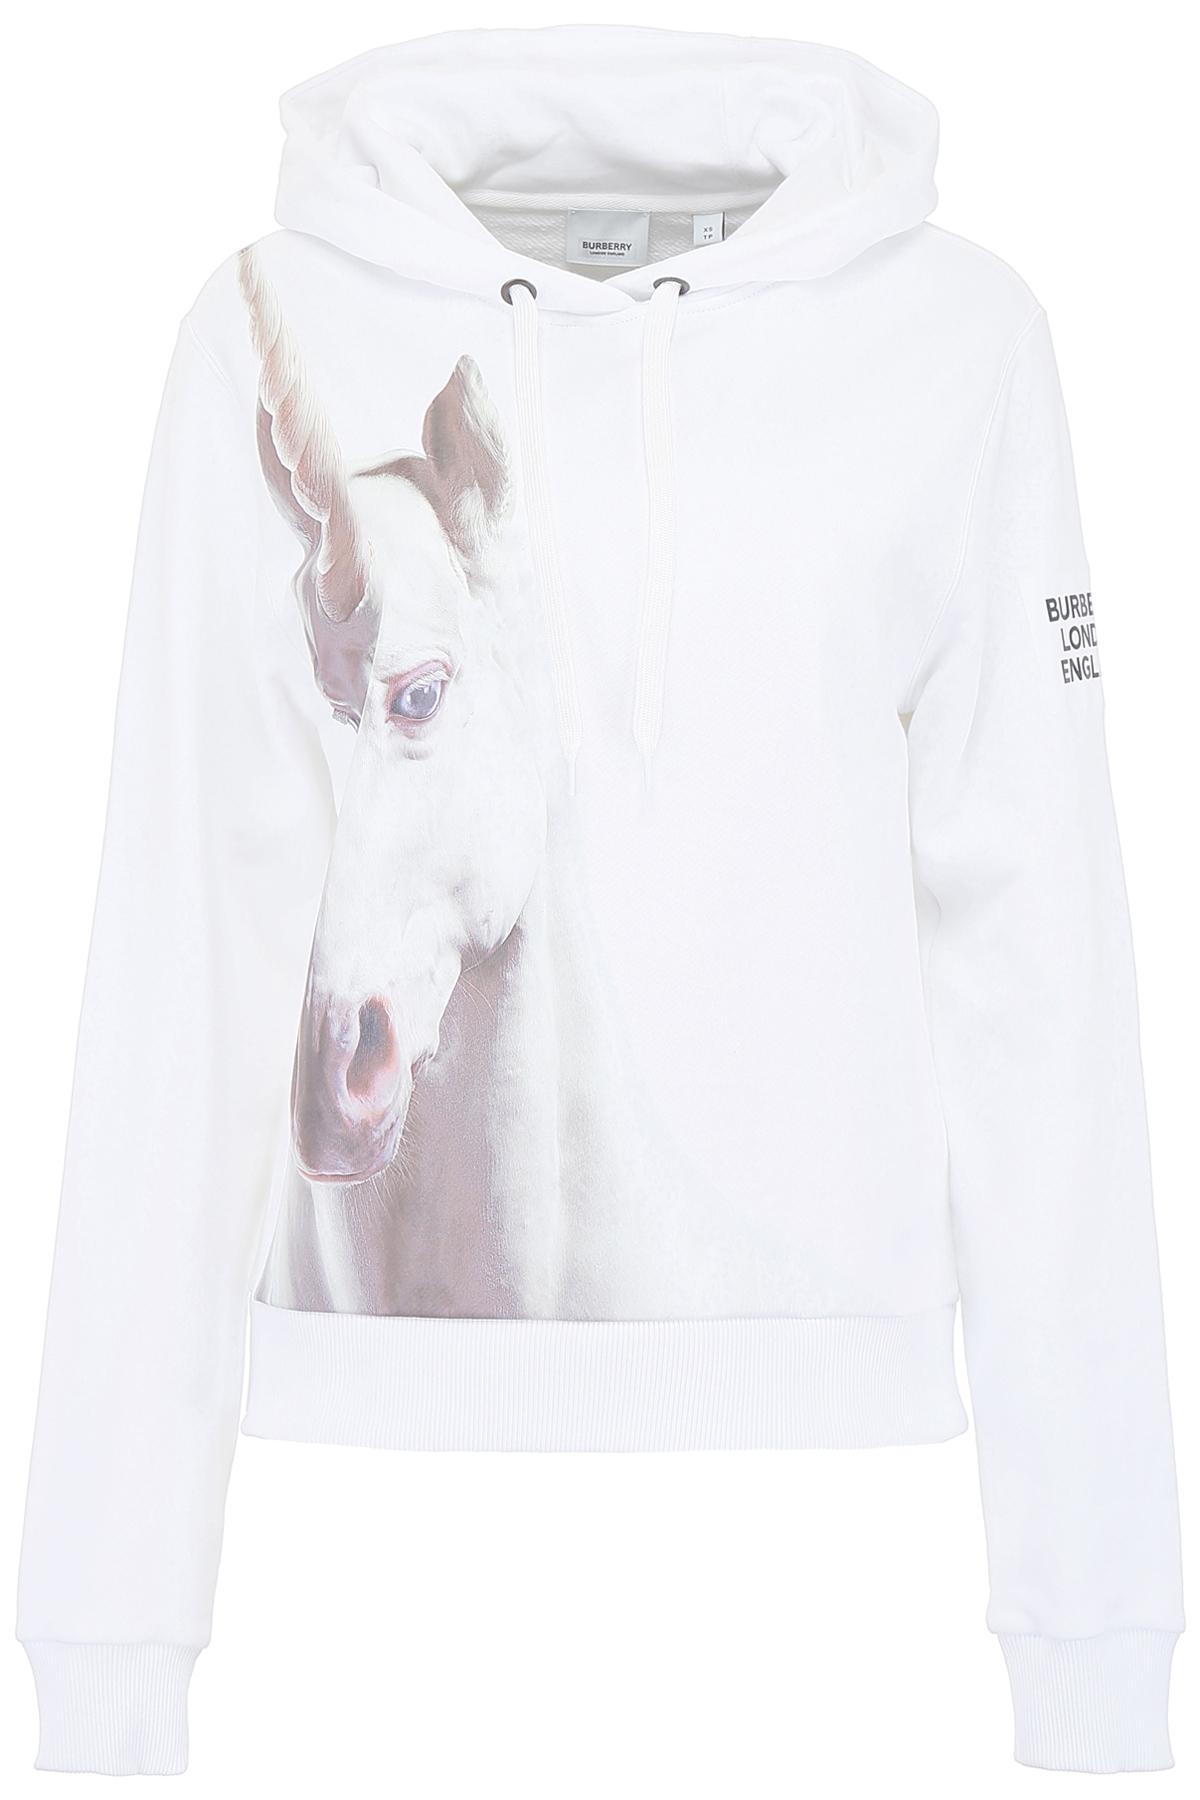 Burberry Cotton Runway Unicorn Print Hoodie in White | Lyst